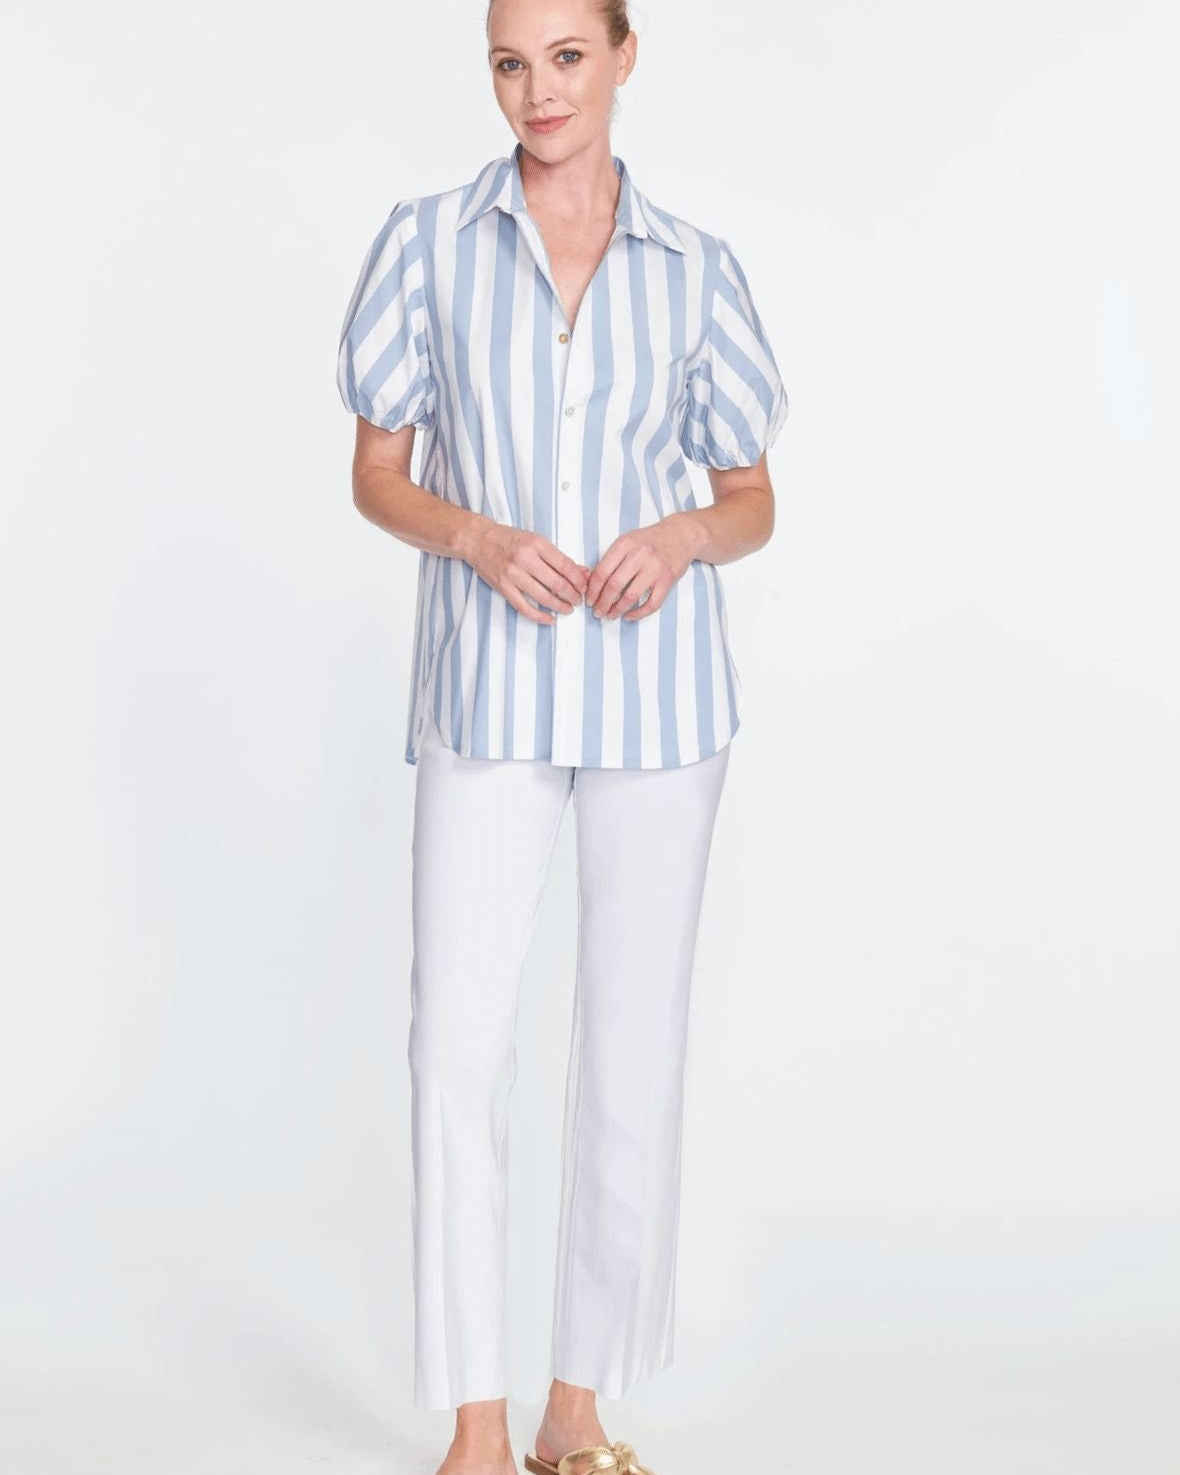 Estelle & Finn Women's Shirts & Tops Blue/White / XS Estelle & Finn Girl Camp Shirt